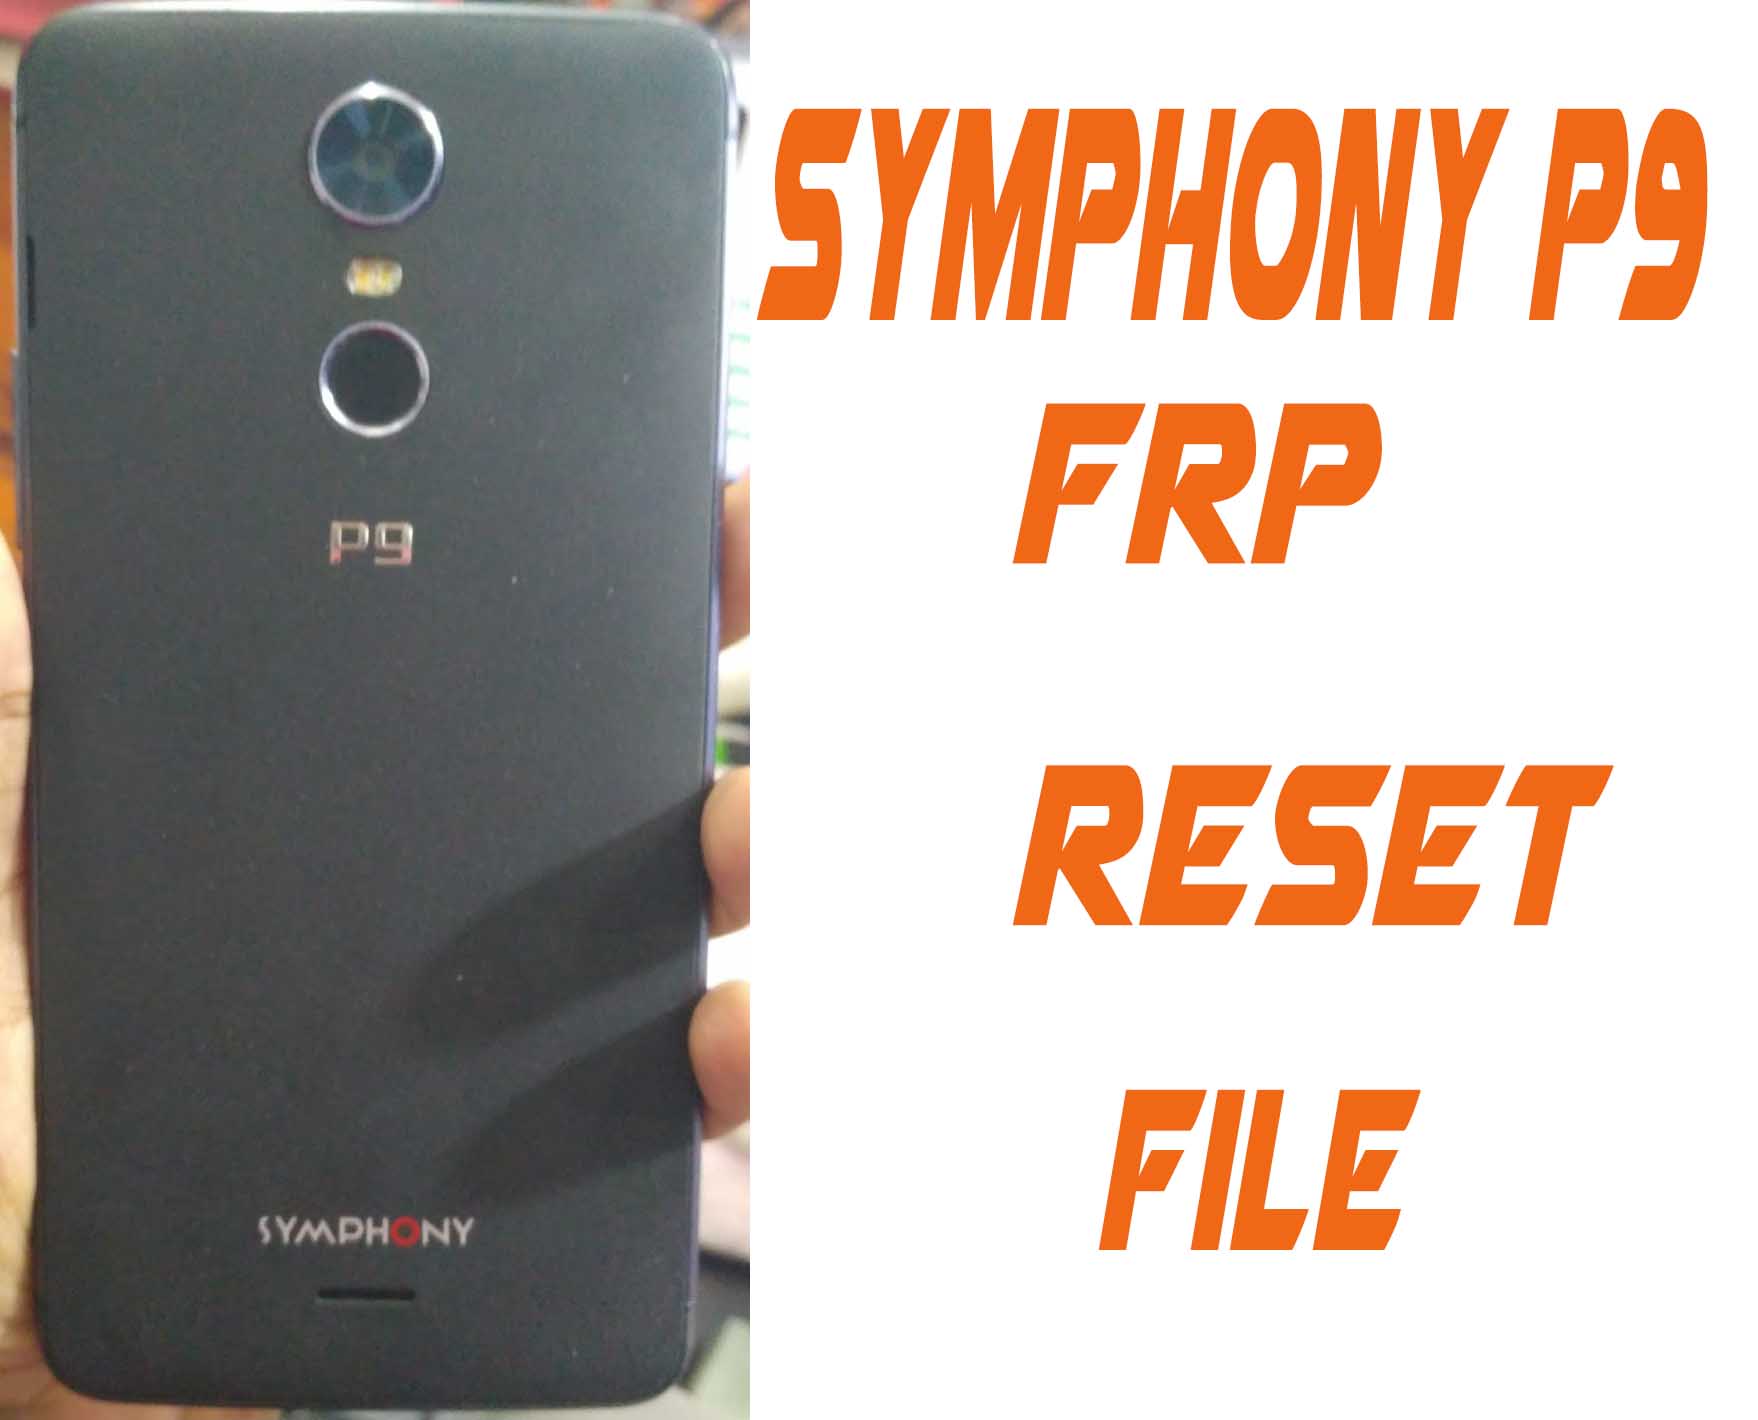 Symphony P9 Frp Reset File